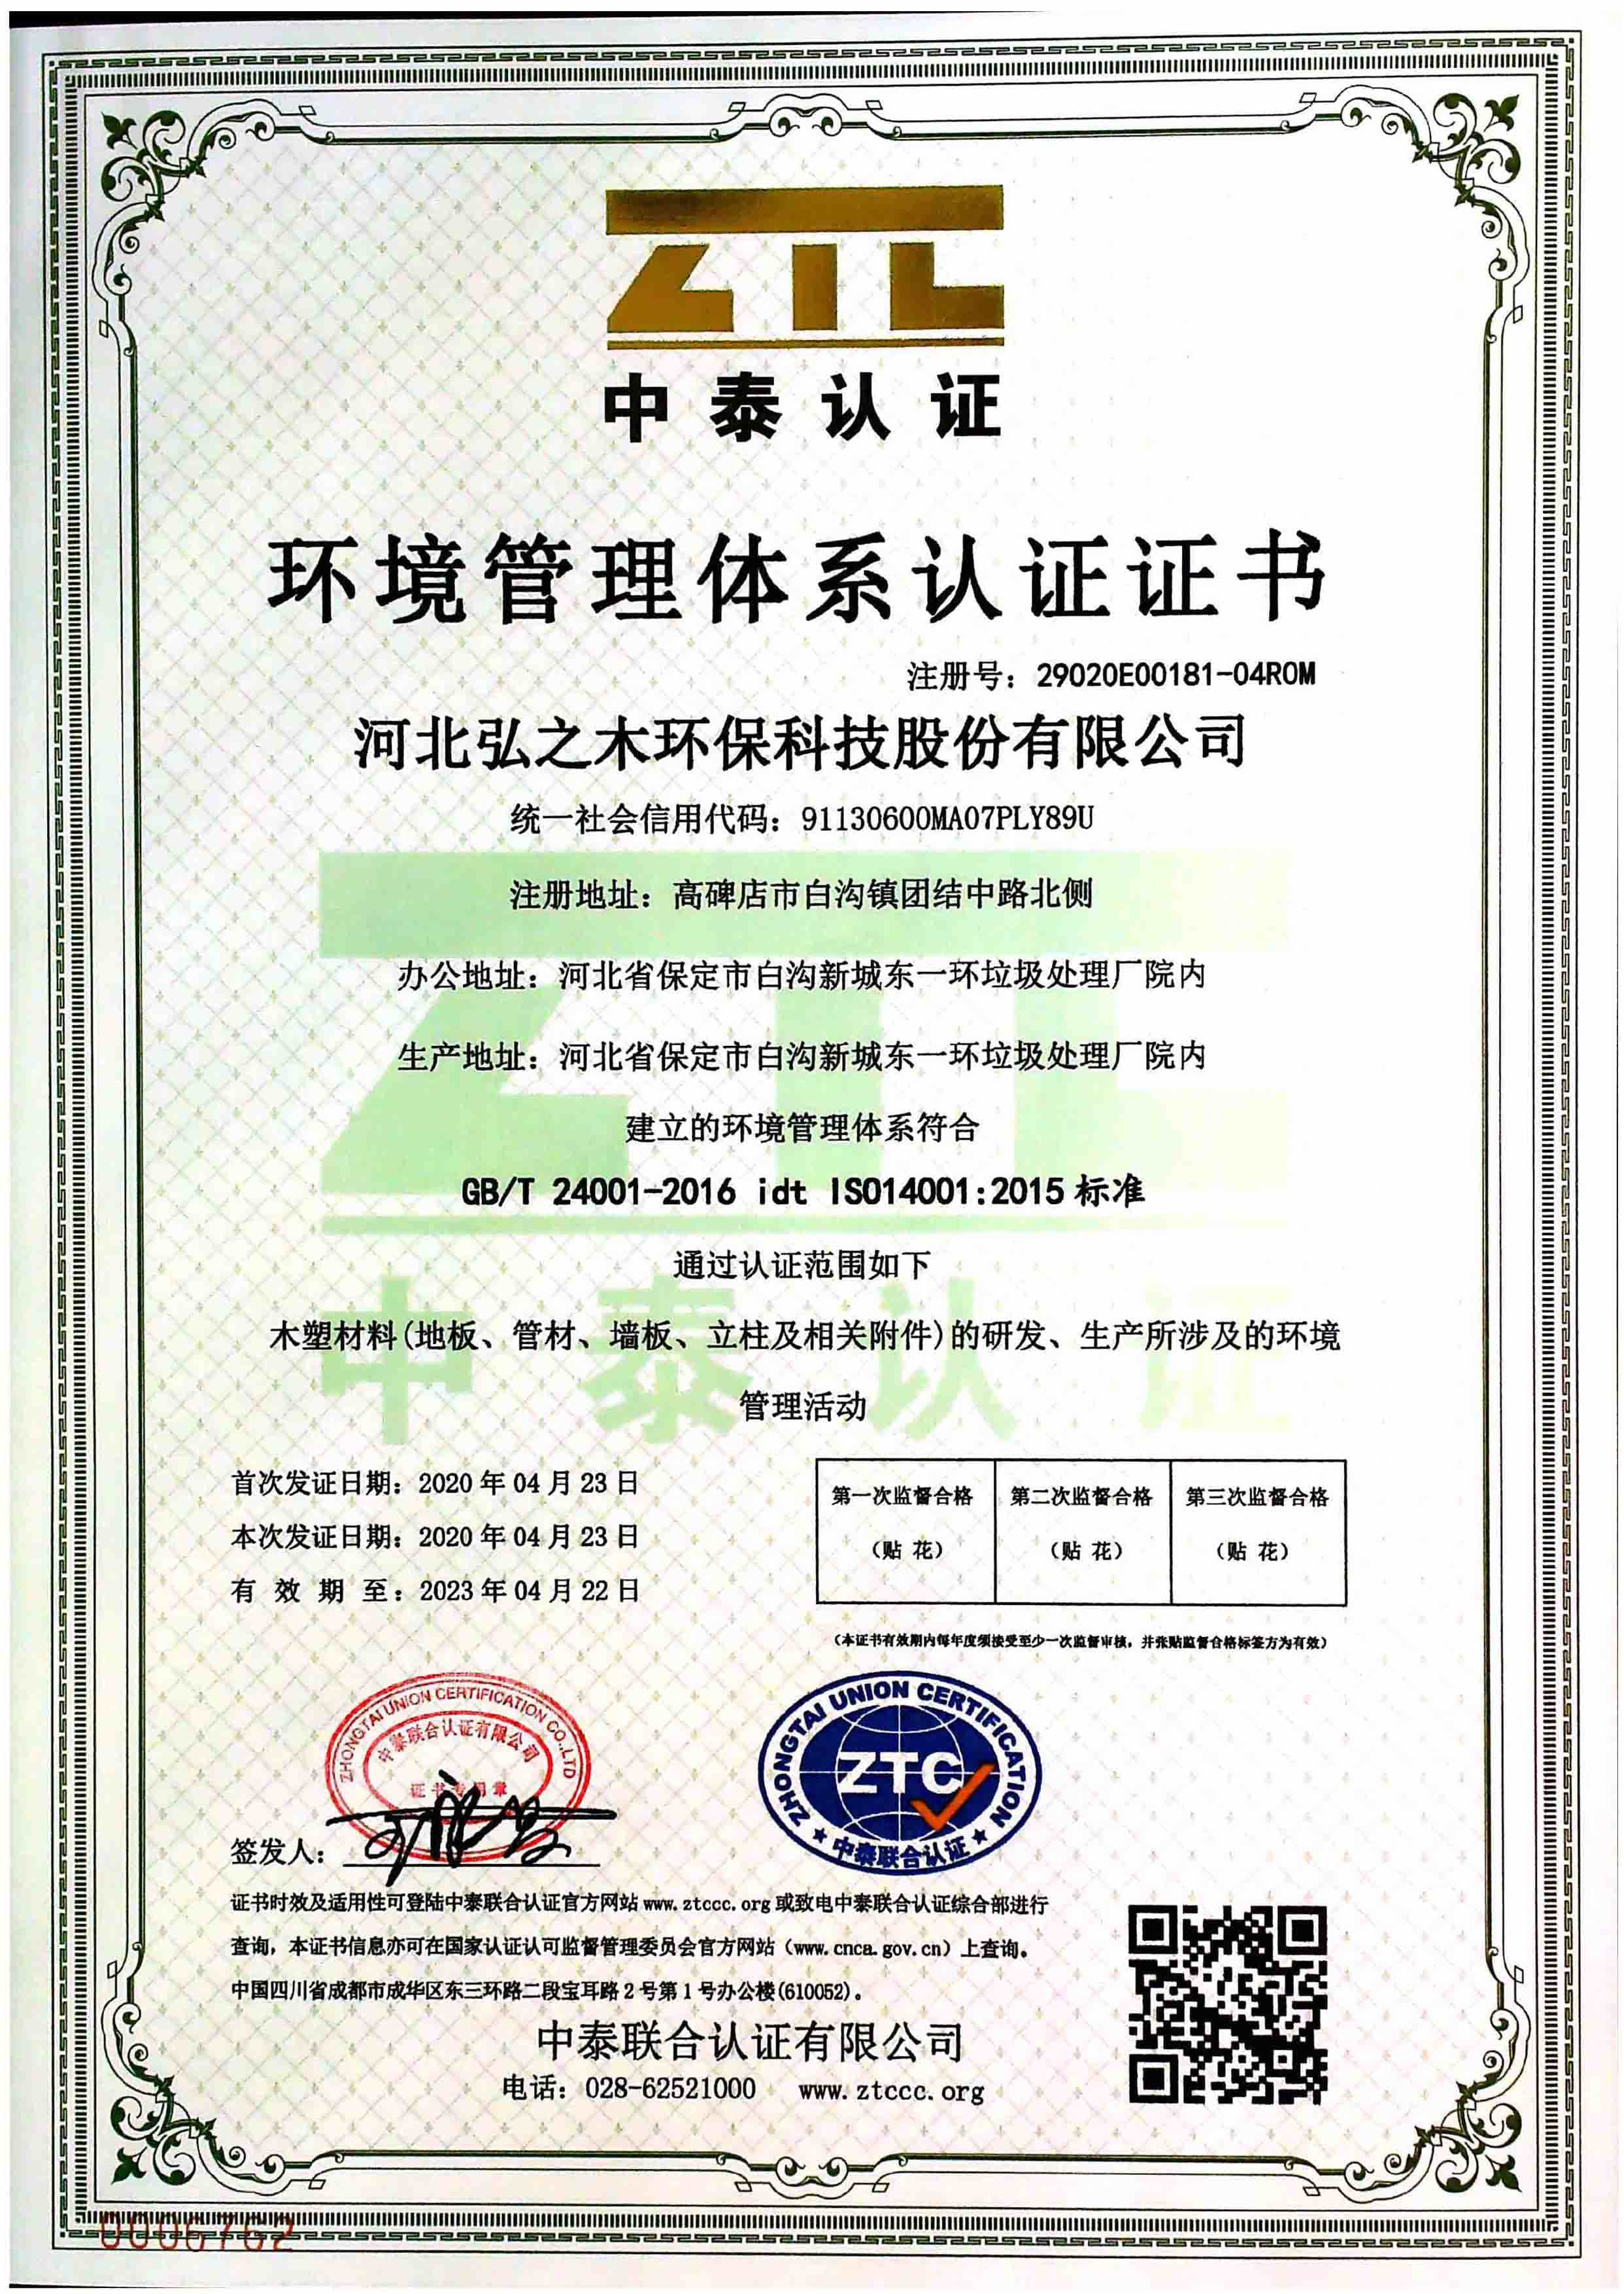 Sino-Thailand certification ISO 14001